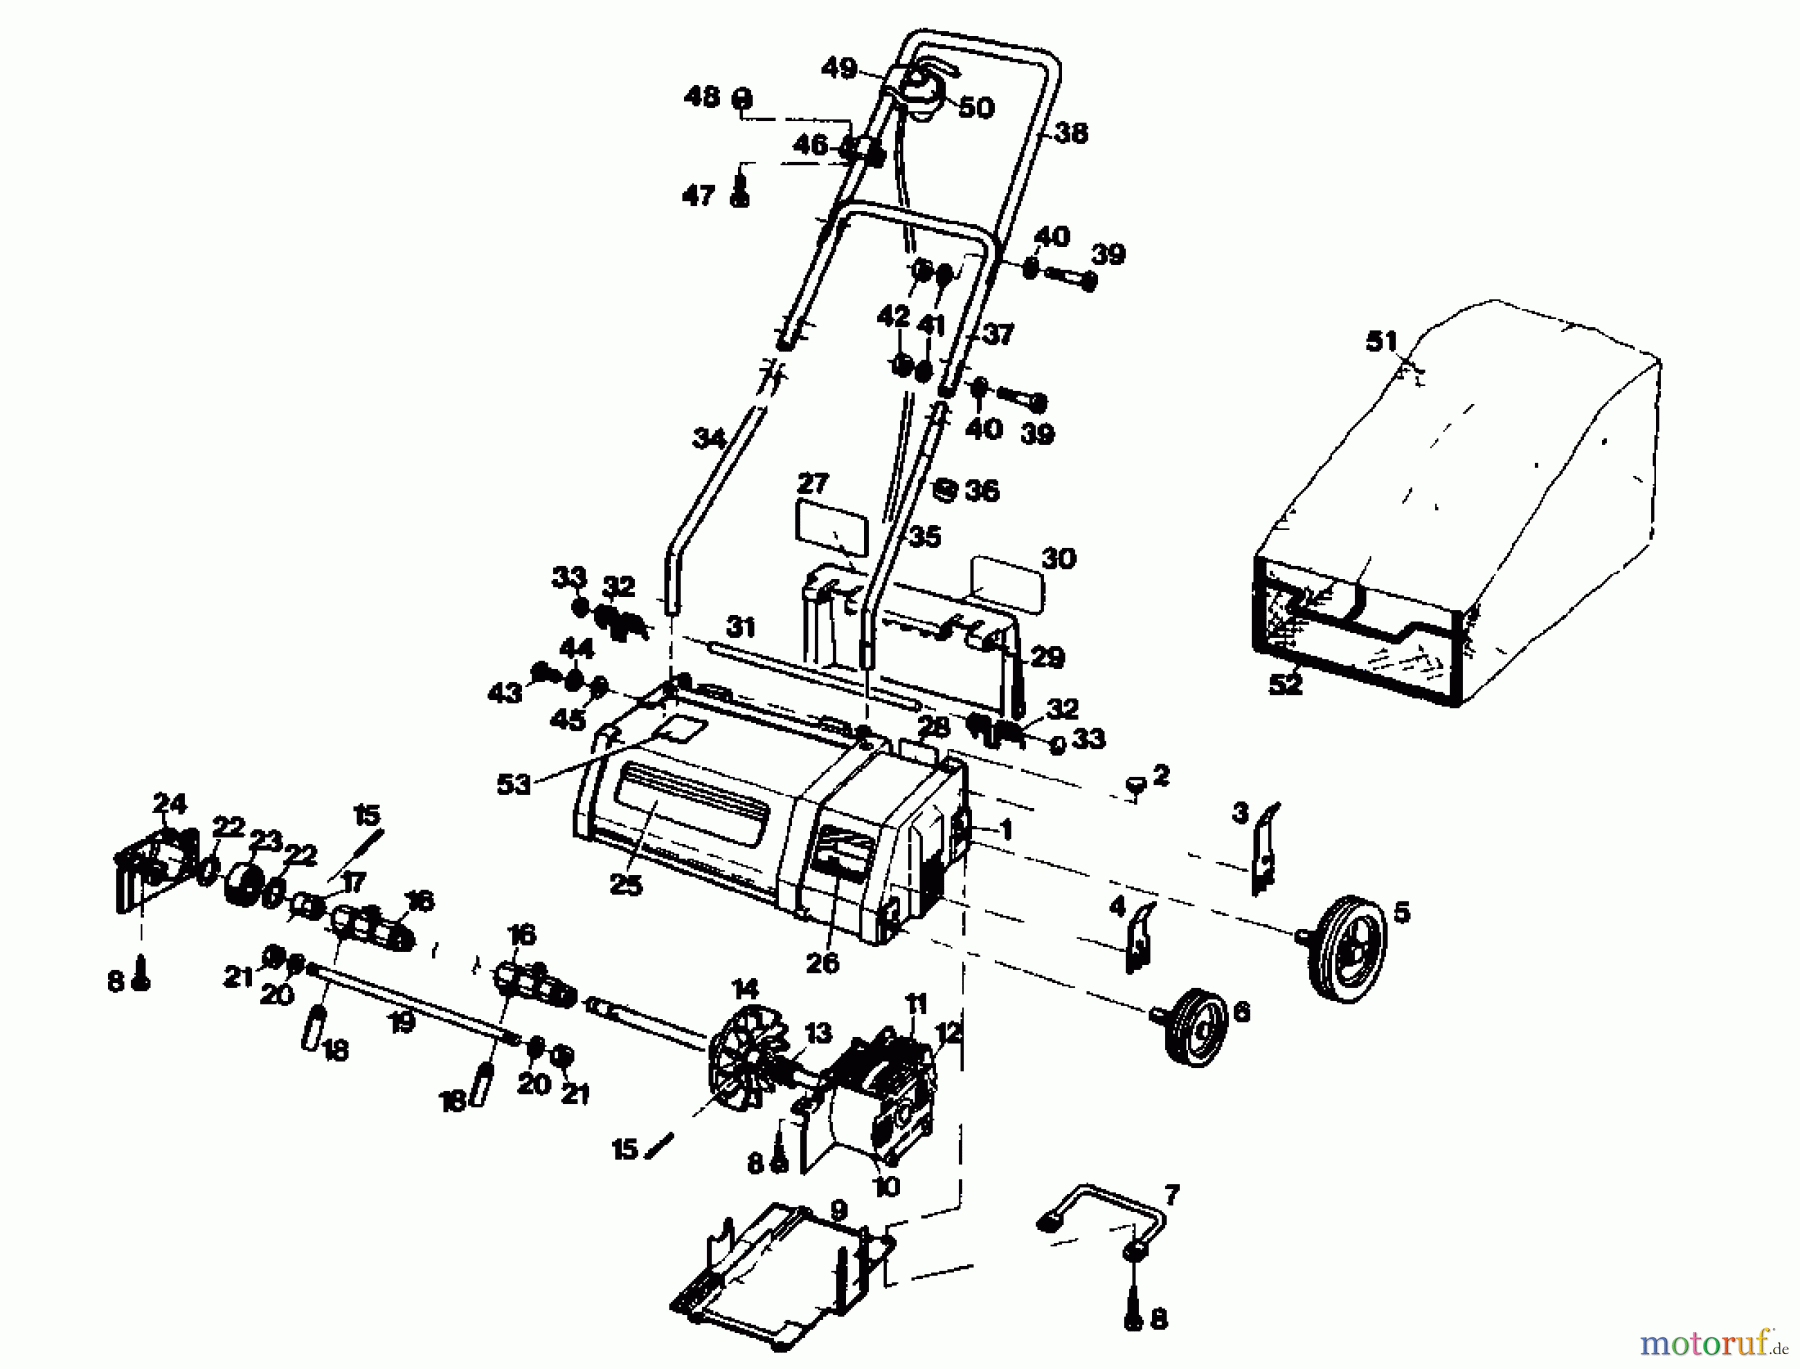  Gutbrod Electric verticutter VE 32 02890.02  (1985) Basic machine